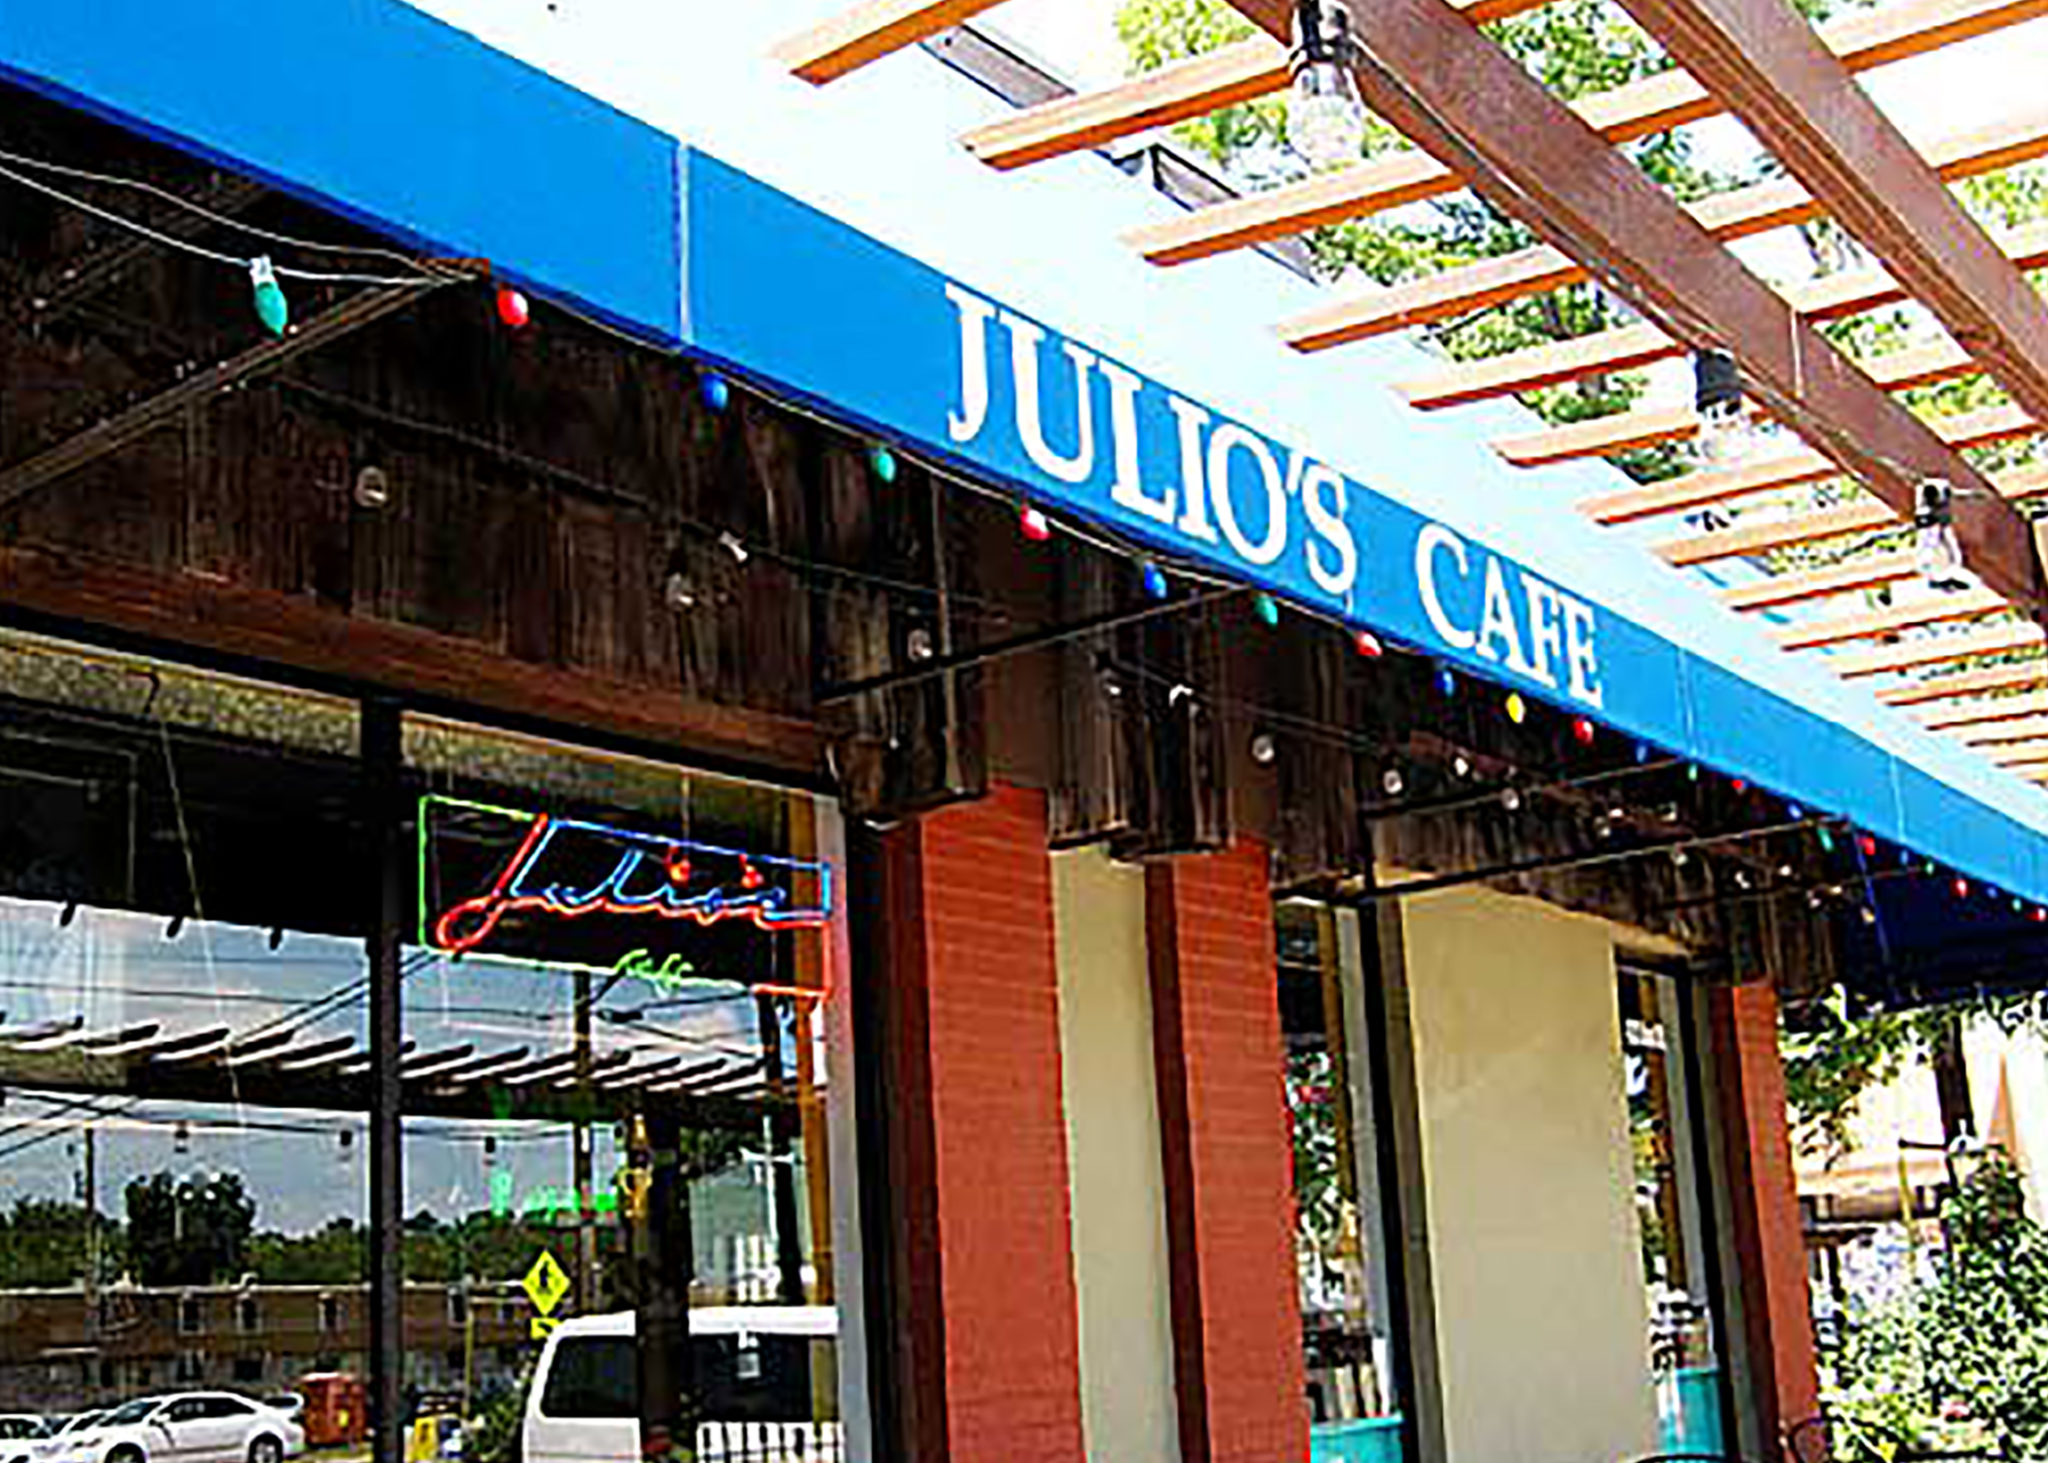 Julio's Cafe awning